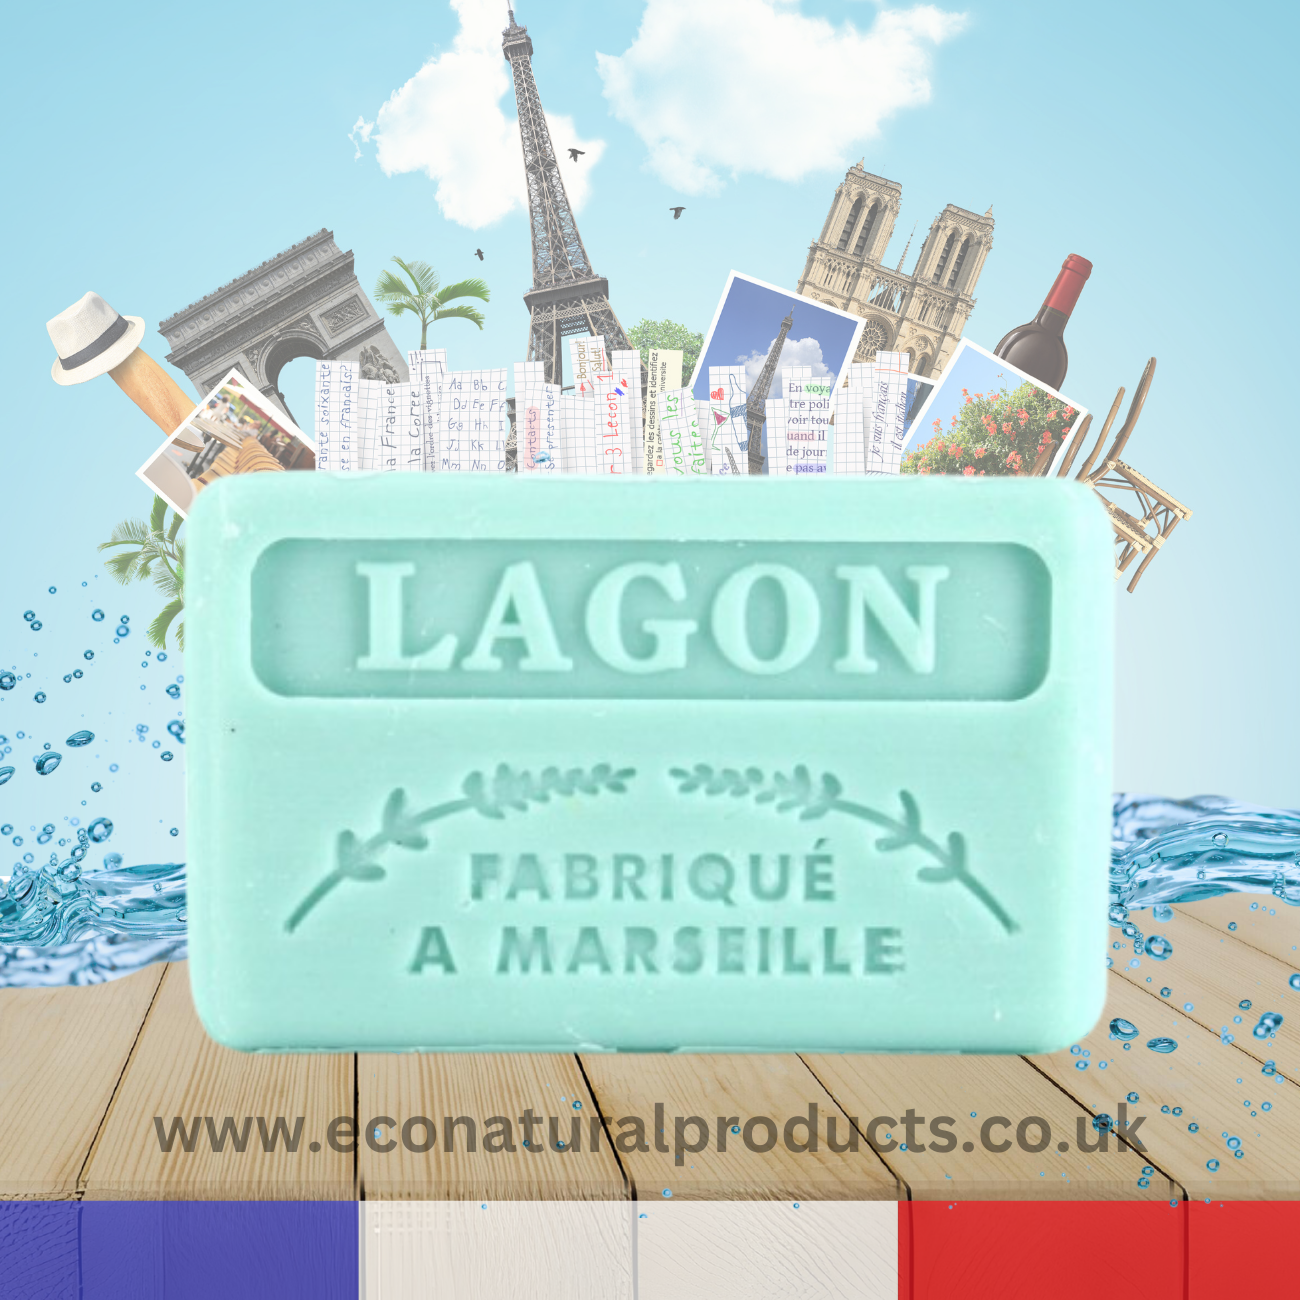 French Marseille Soap Lagon (Lagoon) 125g